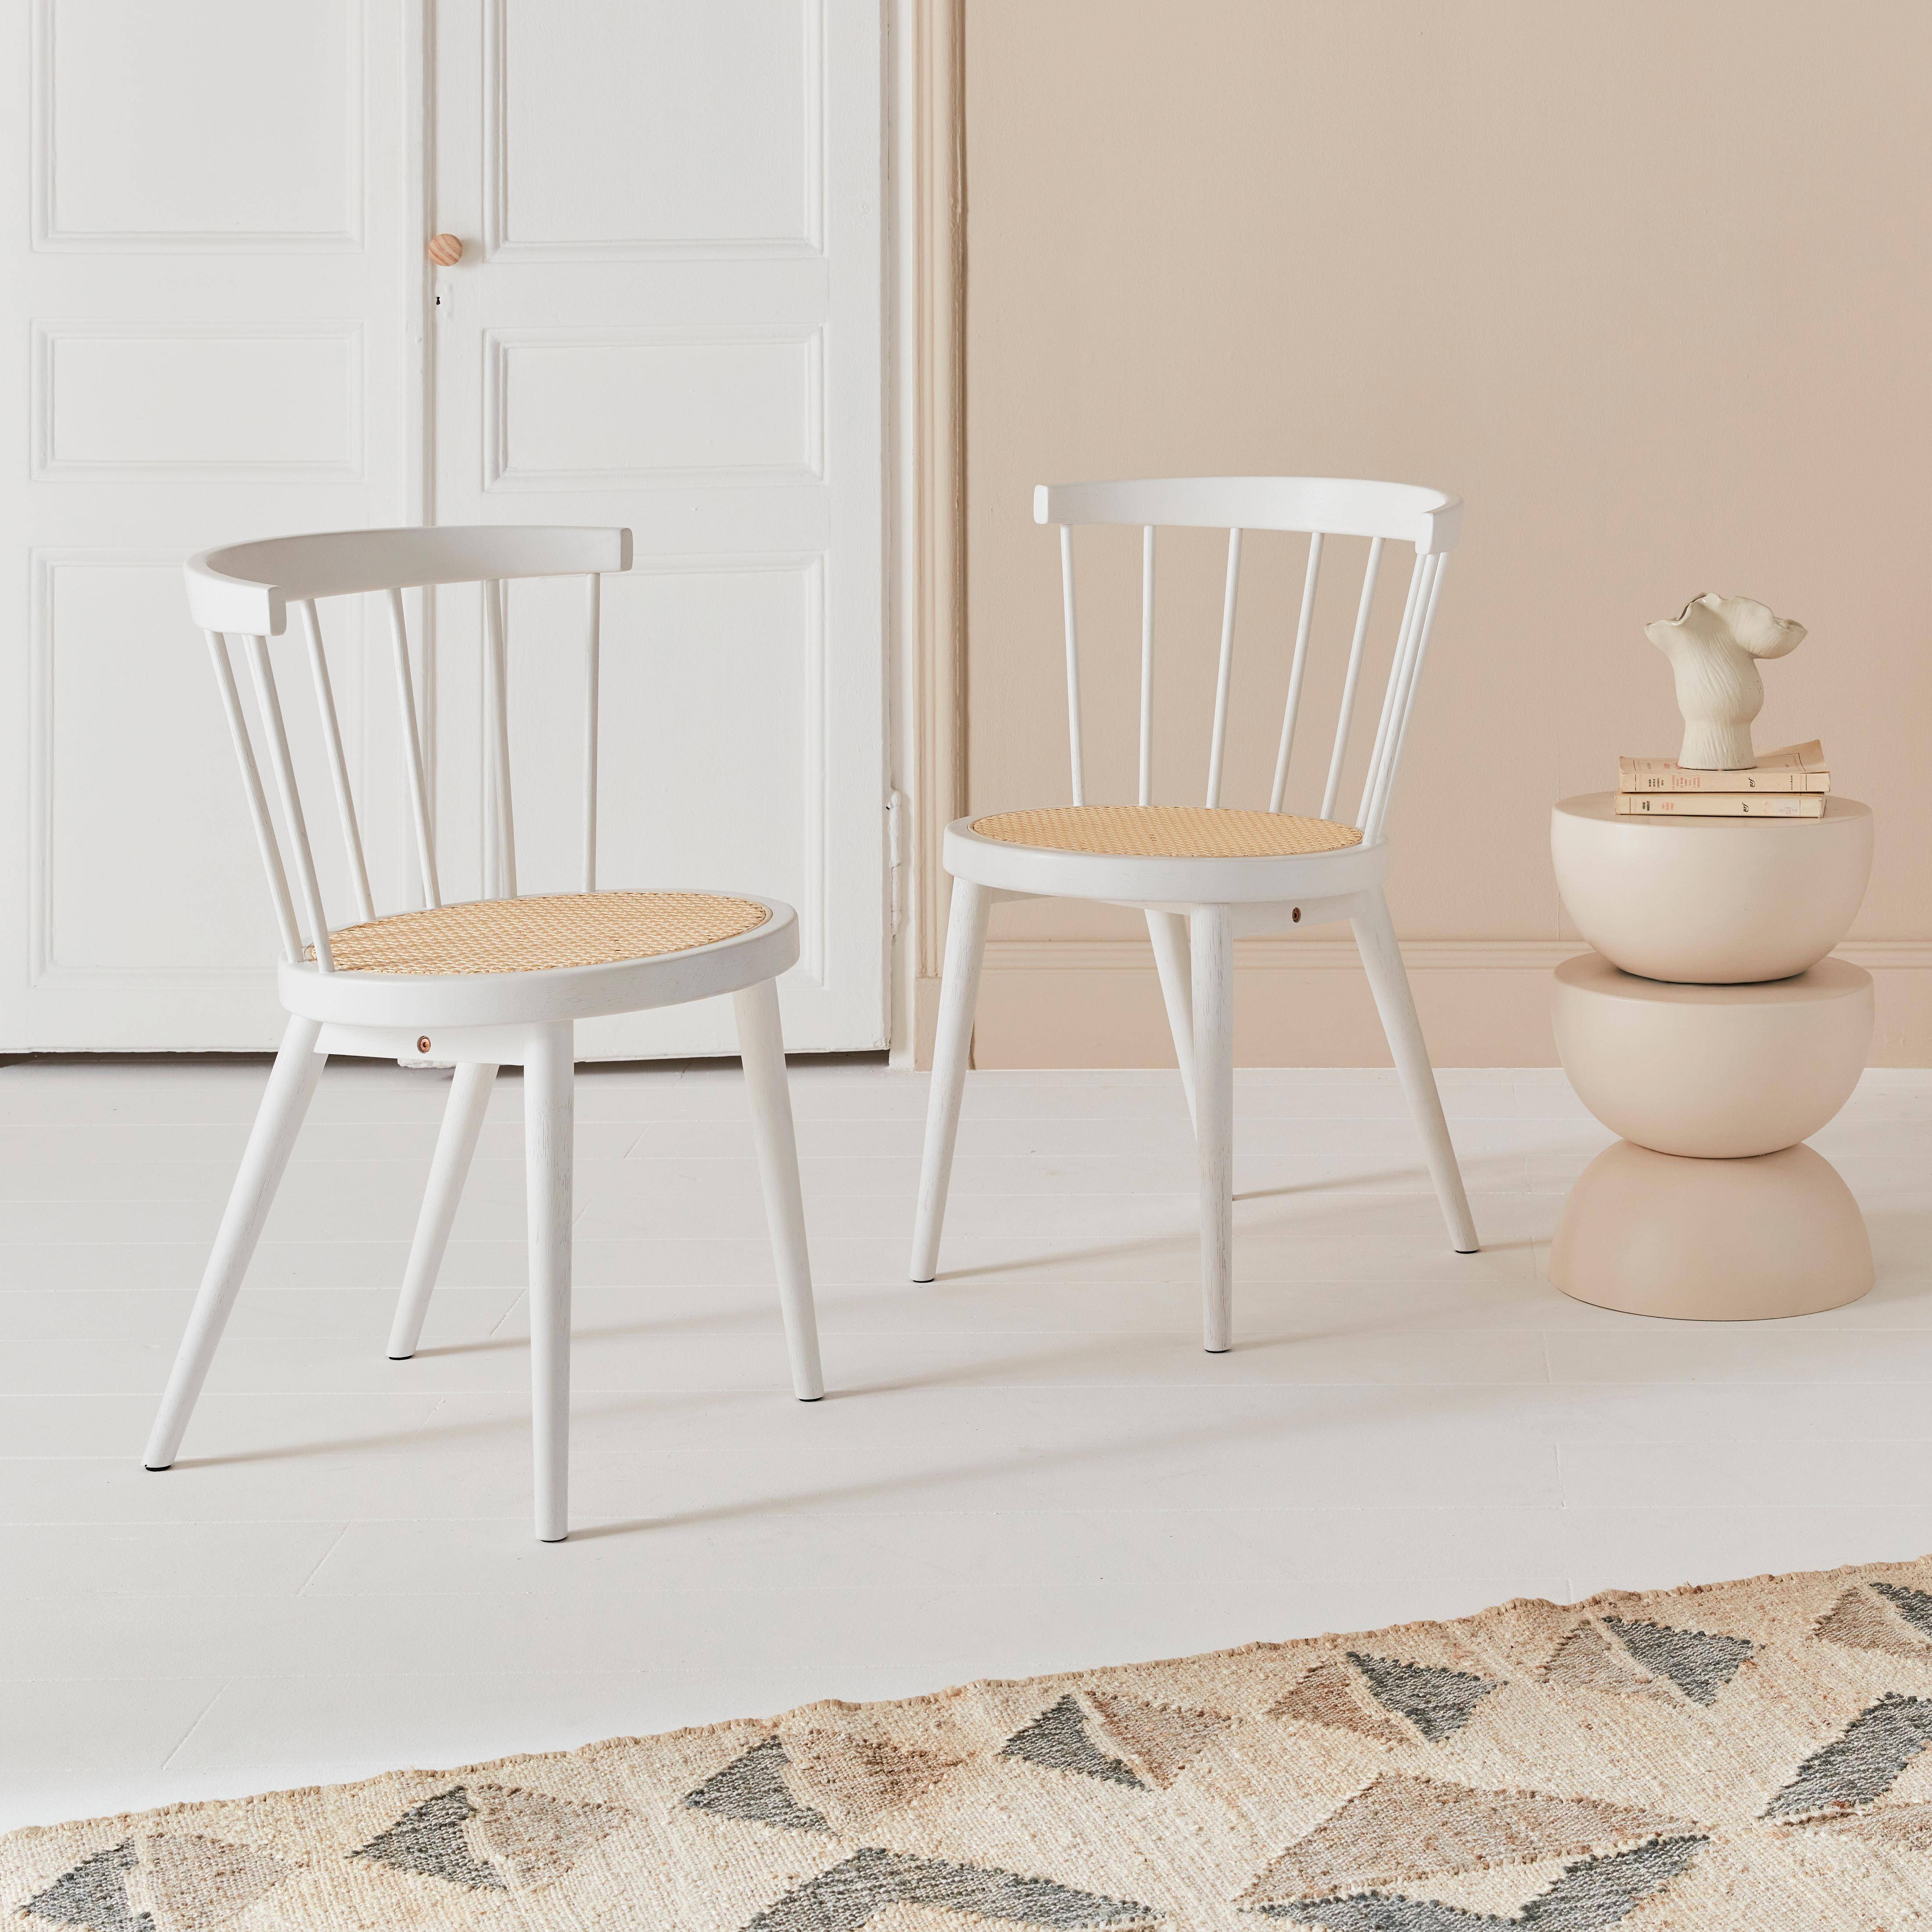 Pair of  Wood and Cane Chairs, Bohemian Spirit, White, L53 x W53.5 x H 6 cm,sweeek,Photo2